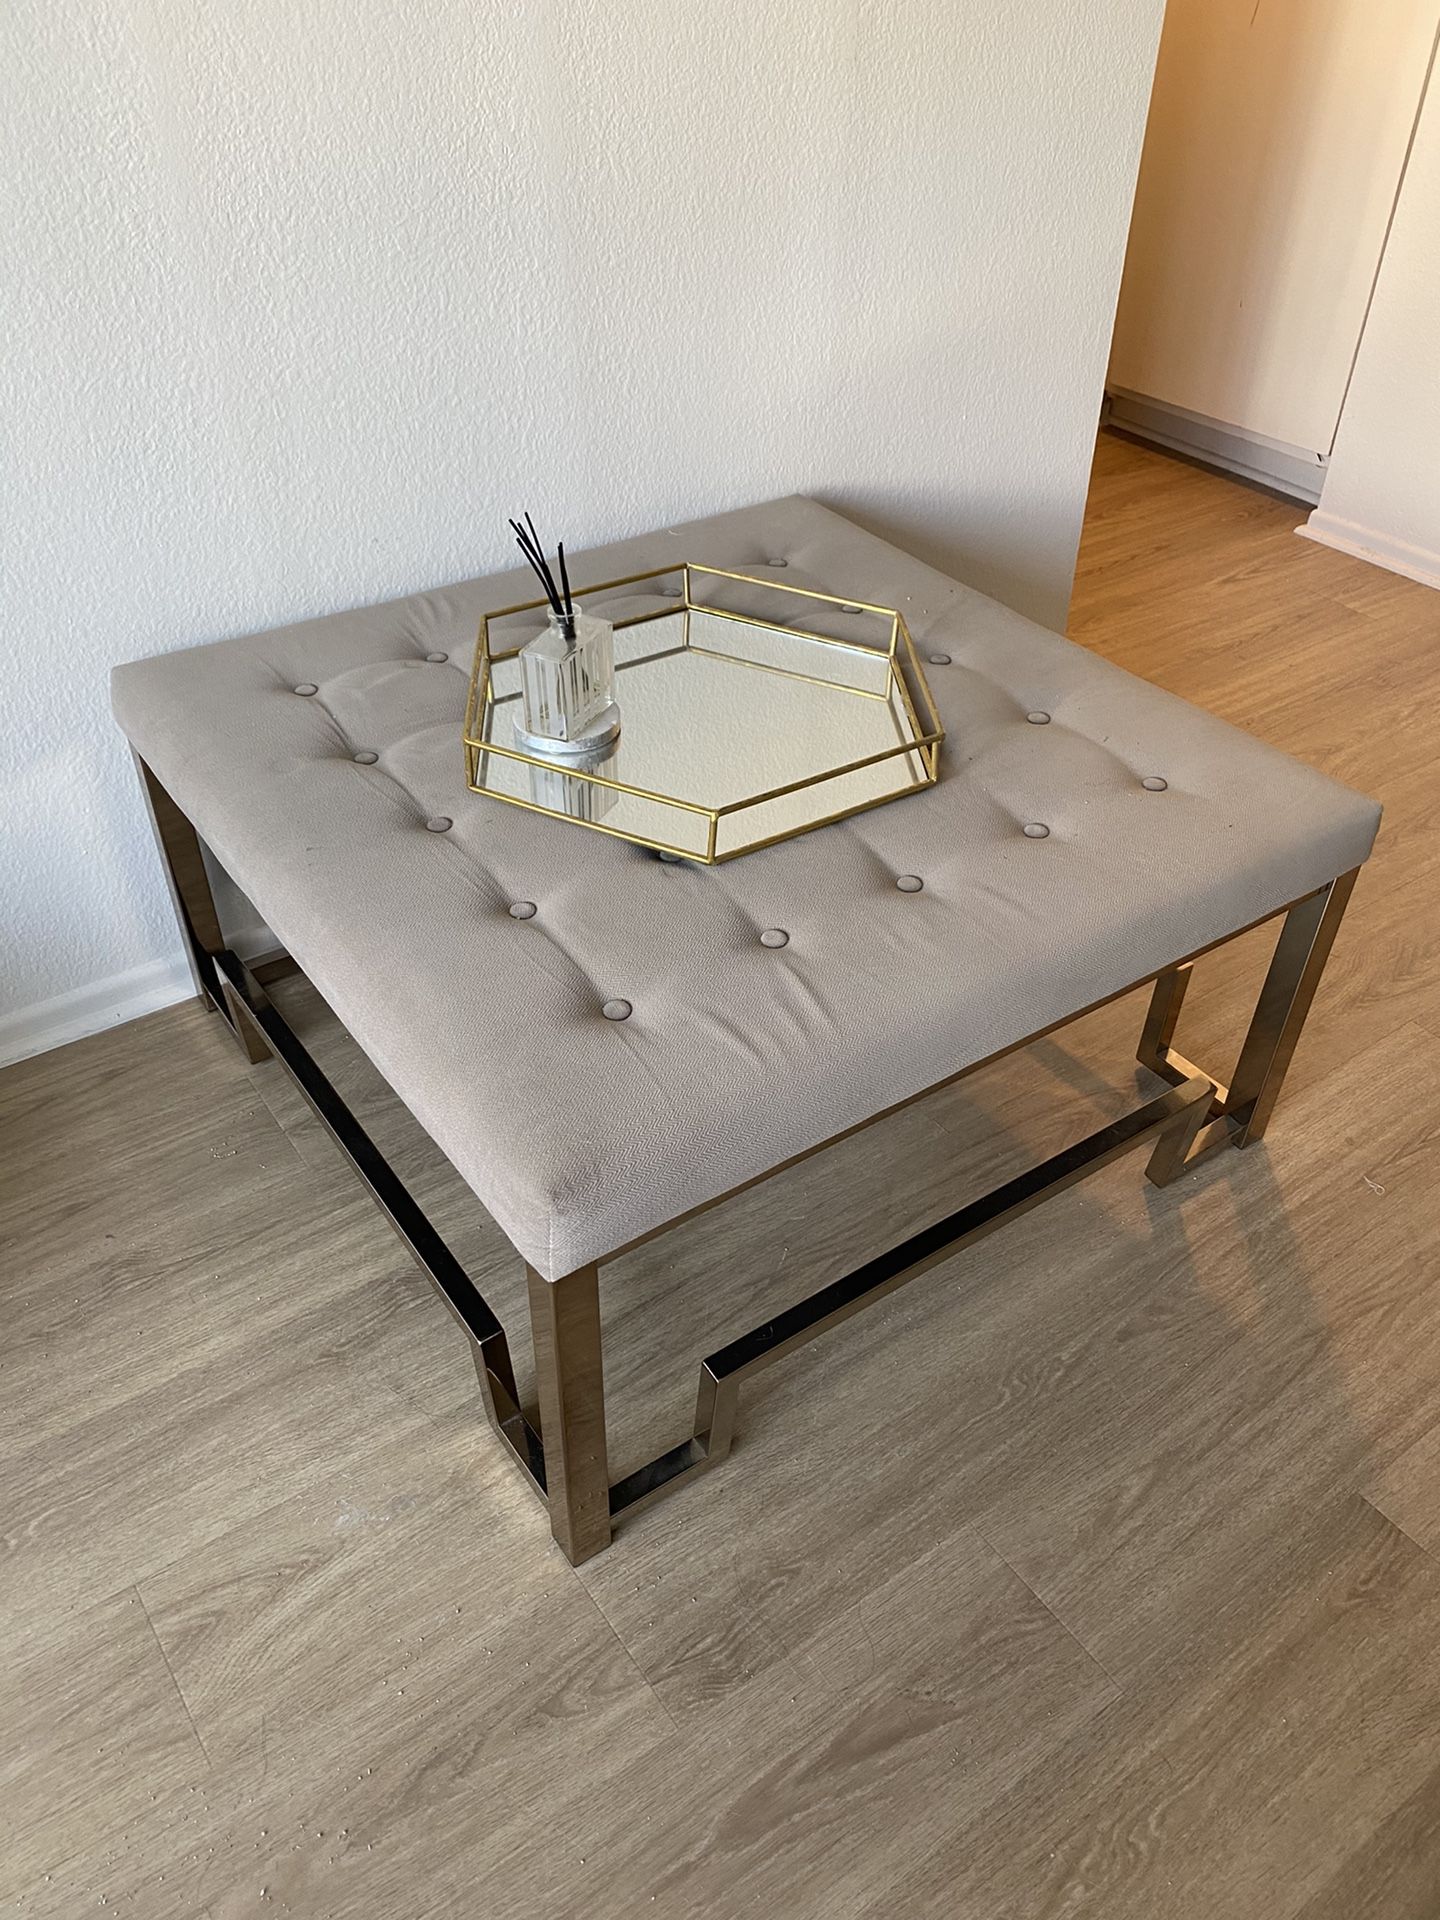 tufted coffee table ottoman & mirror tray decor set